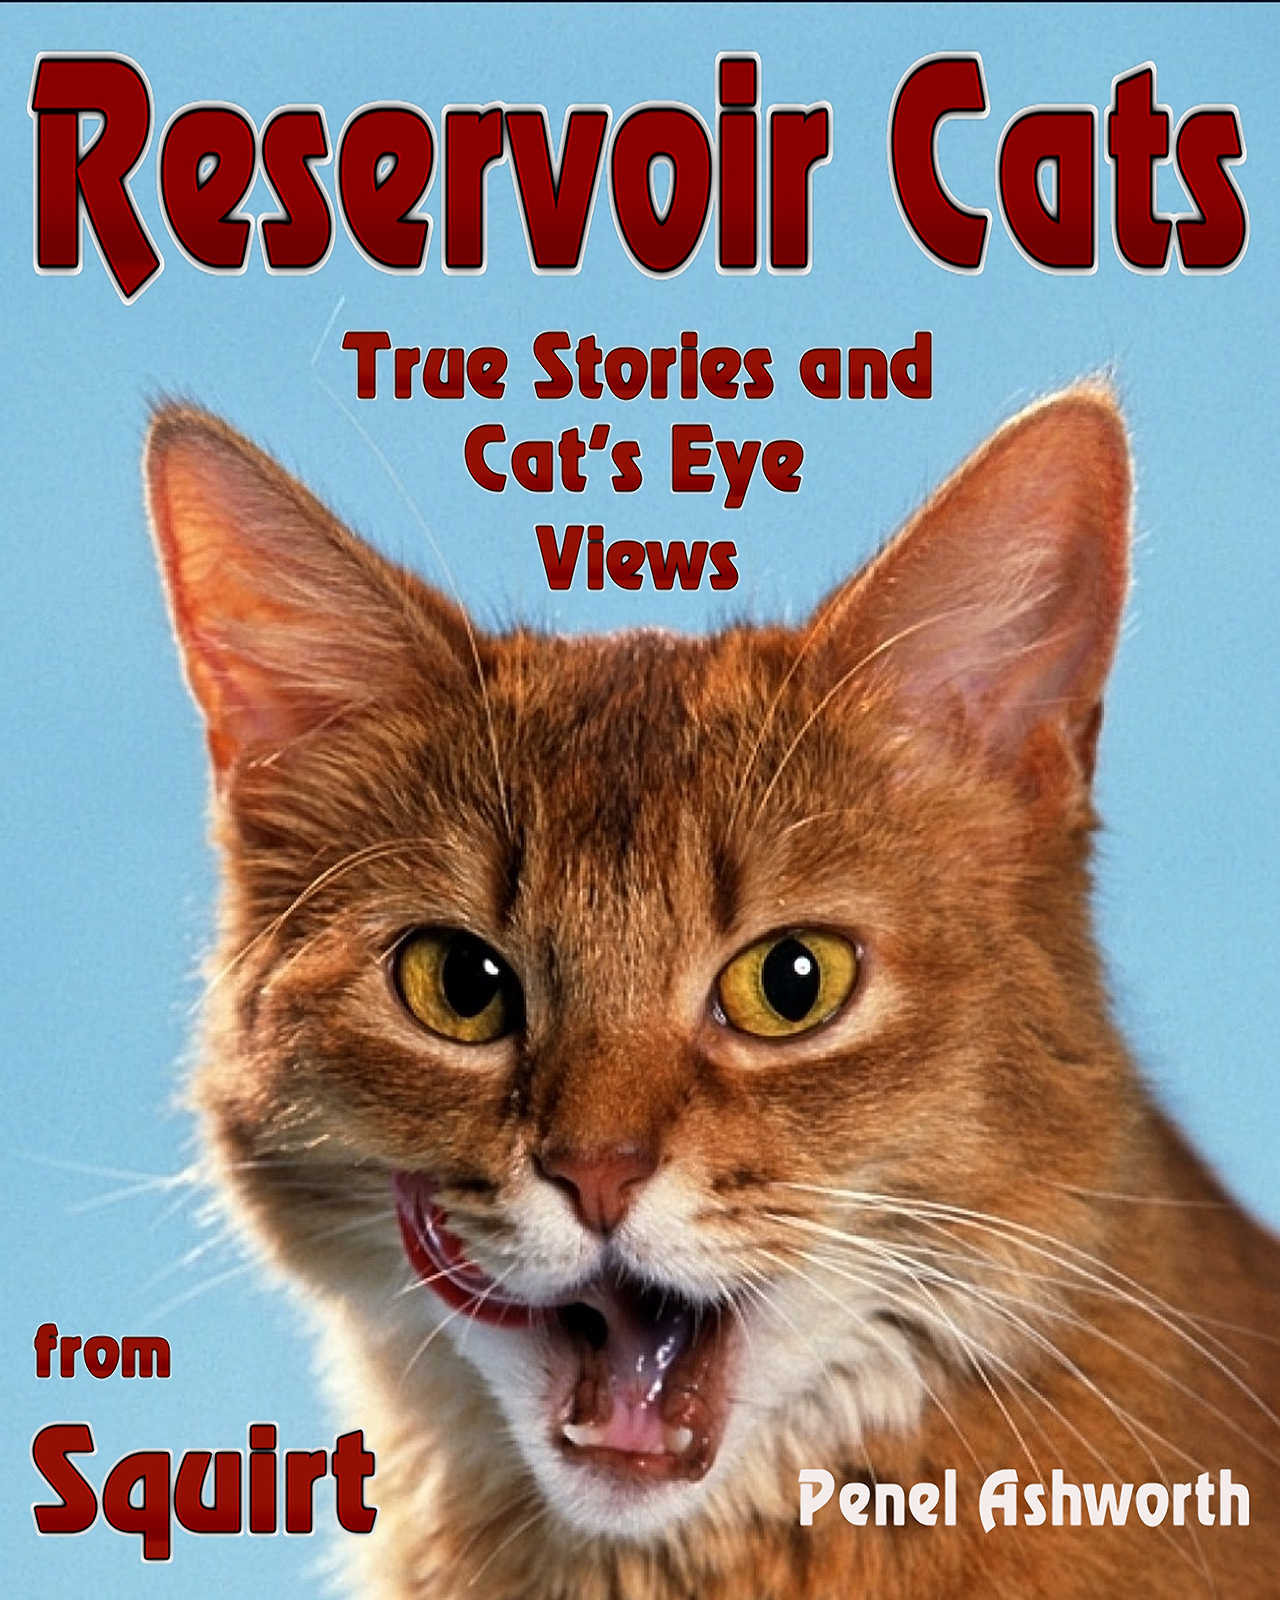 FREE: Reservoir Cats by Penel Ashworth